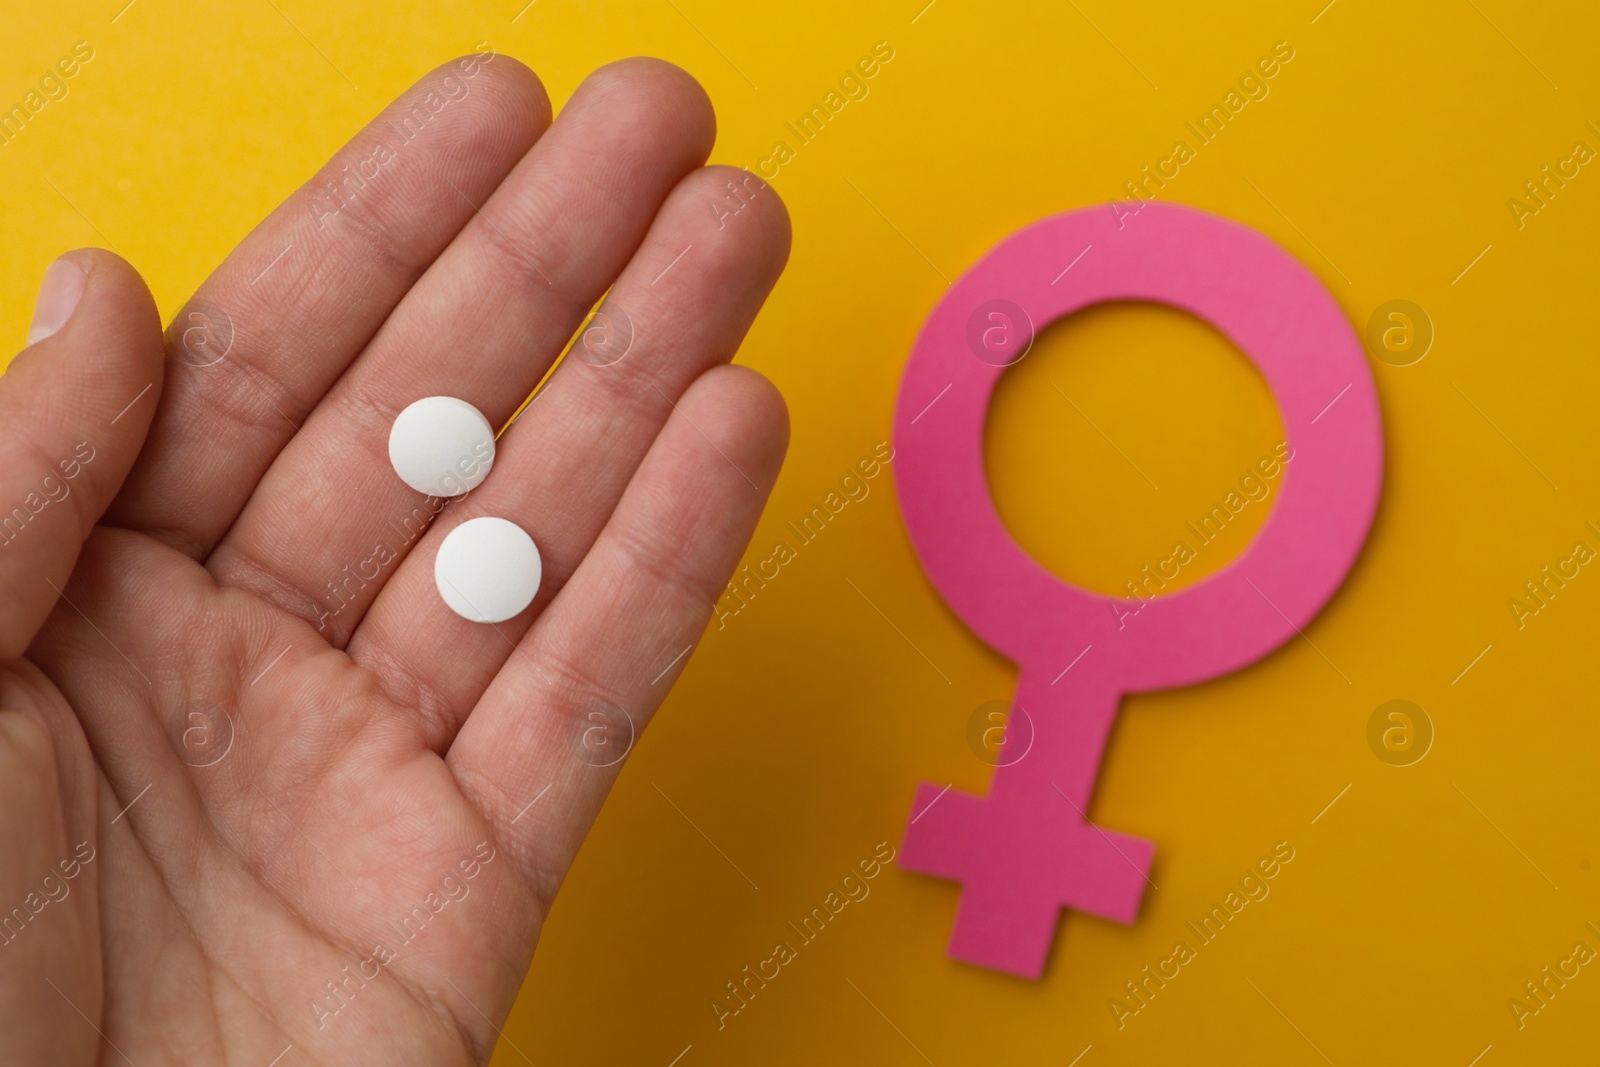 Photo of Girl holding pills near female gender sign on orange background, top view. Women's health